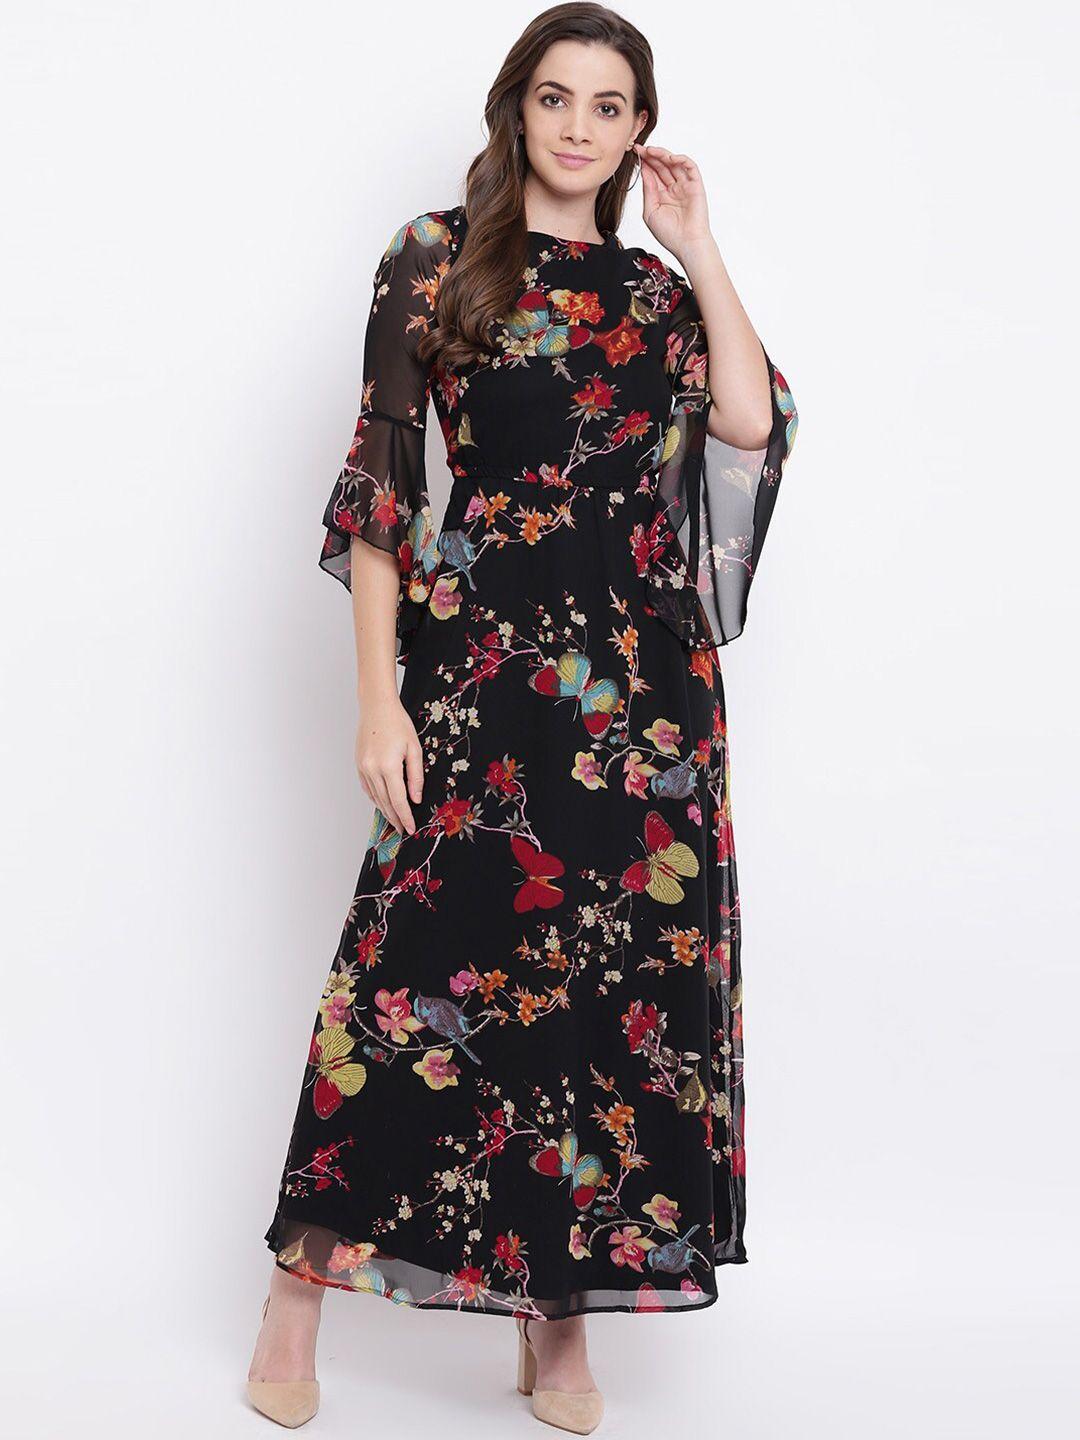 dressberry black floral print bell sleeve georgette maxi dress